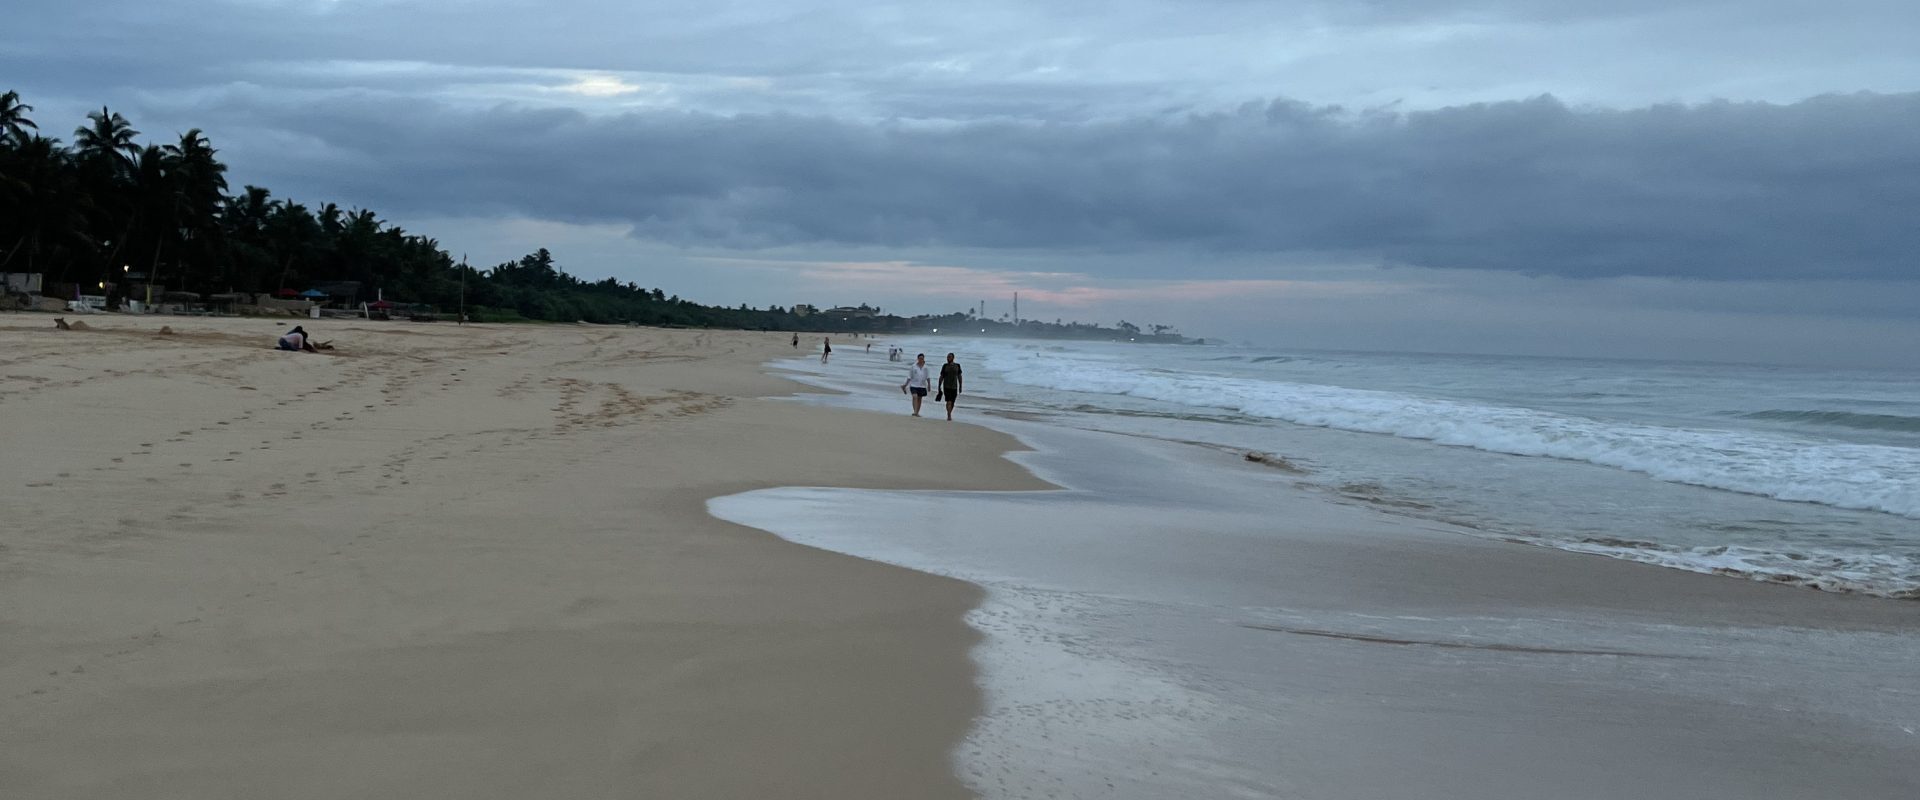 habaraduwa-land-beach-view-srilanka